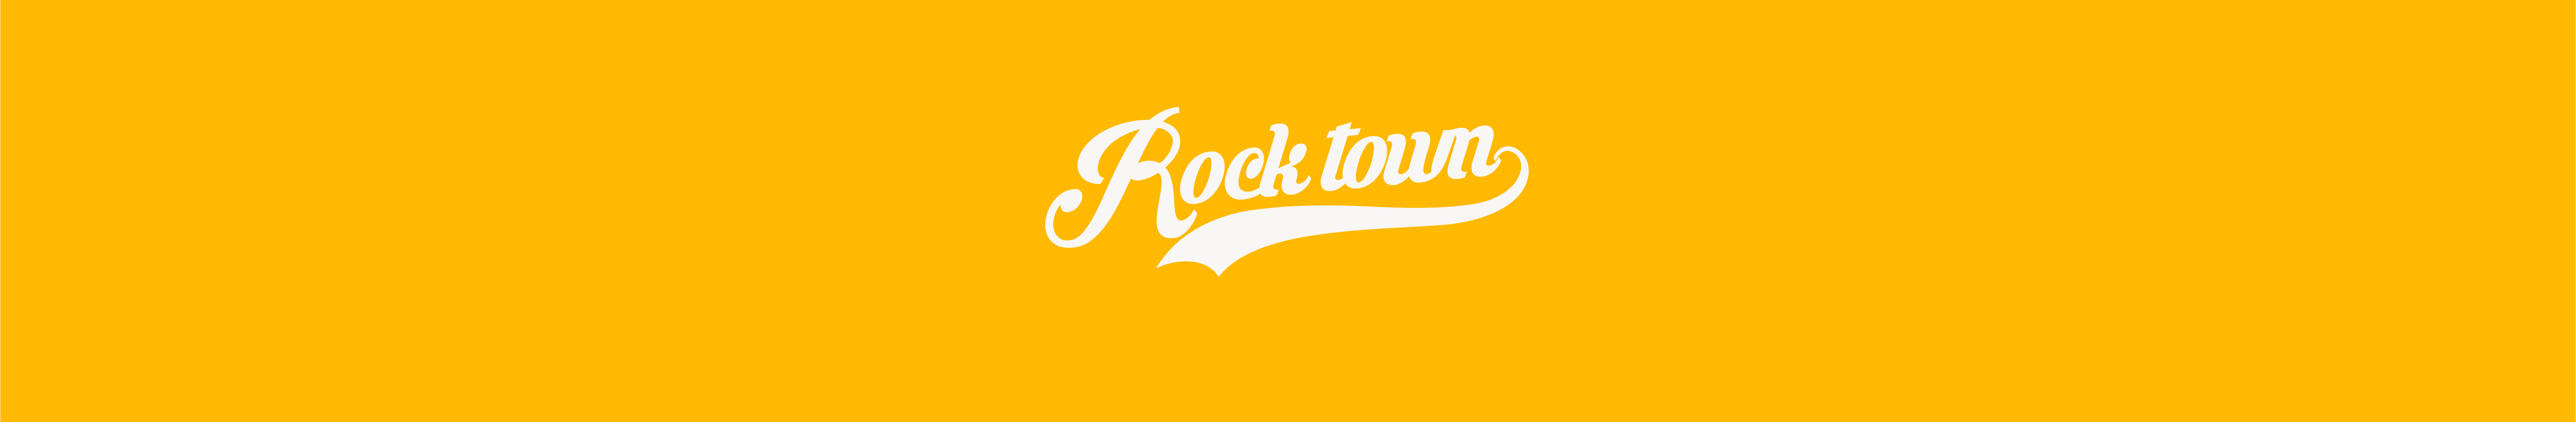 Rock Town profil başlığı